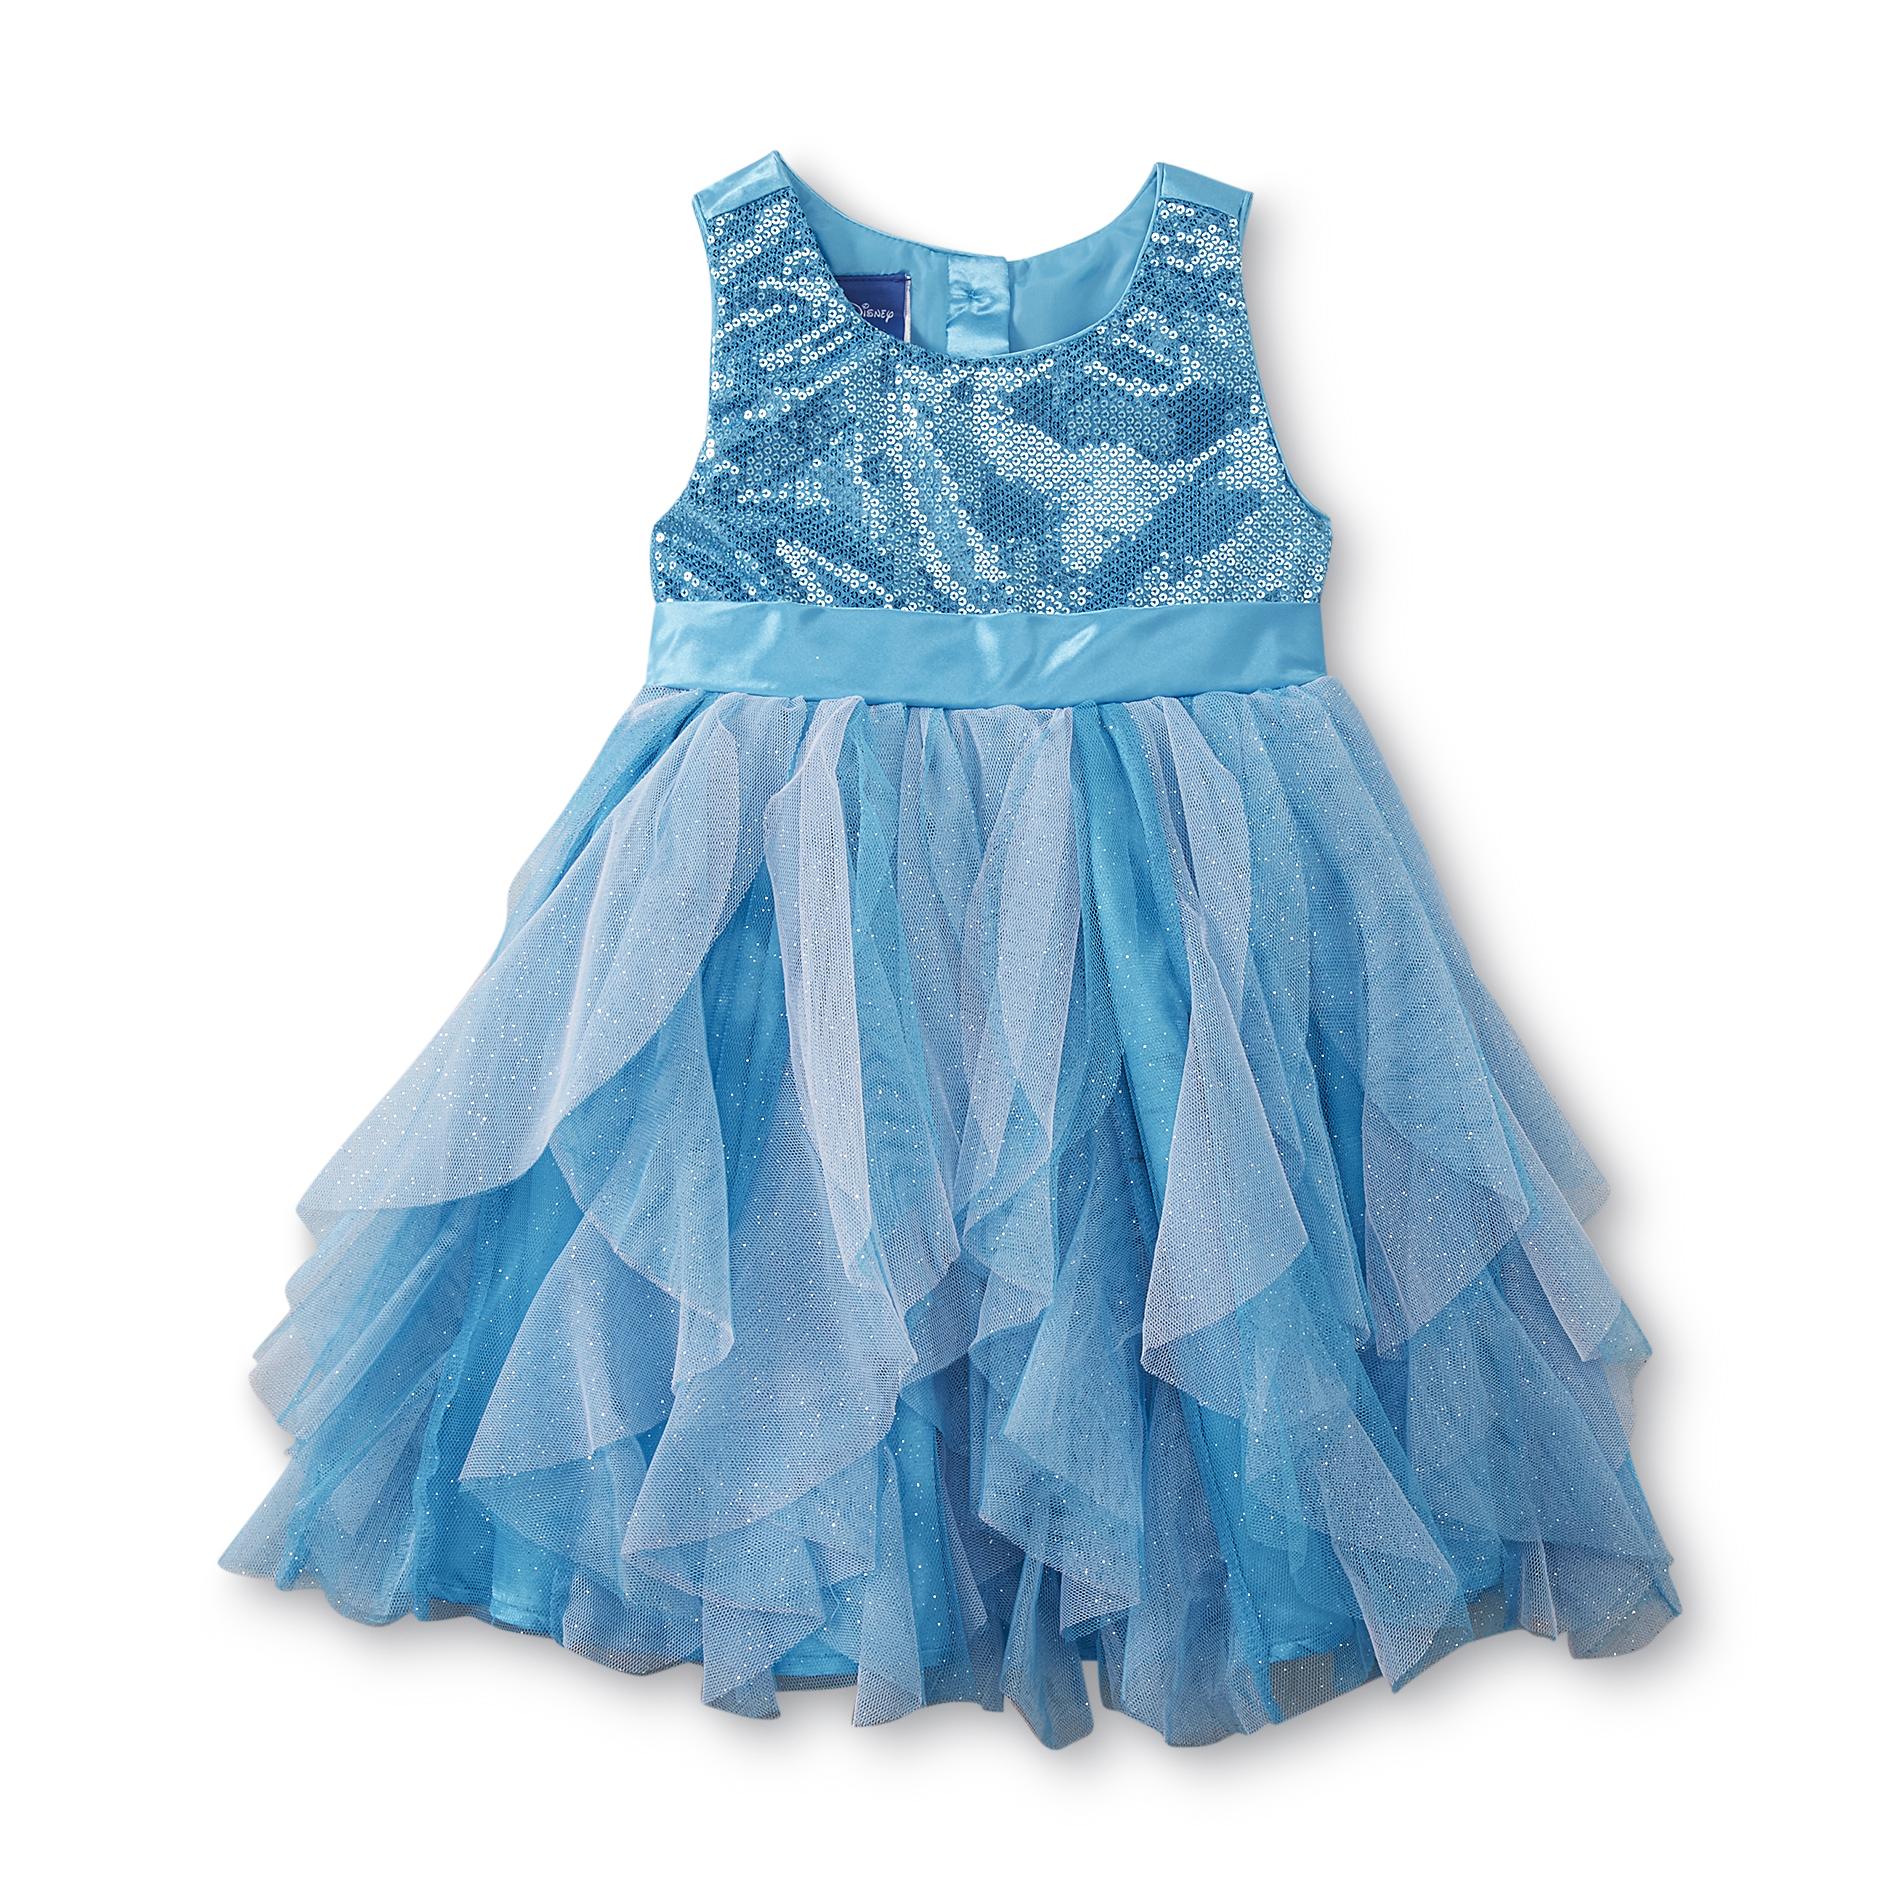 Disney Frozen Toddler Girl's Party Dress